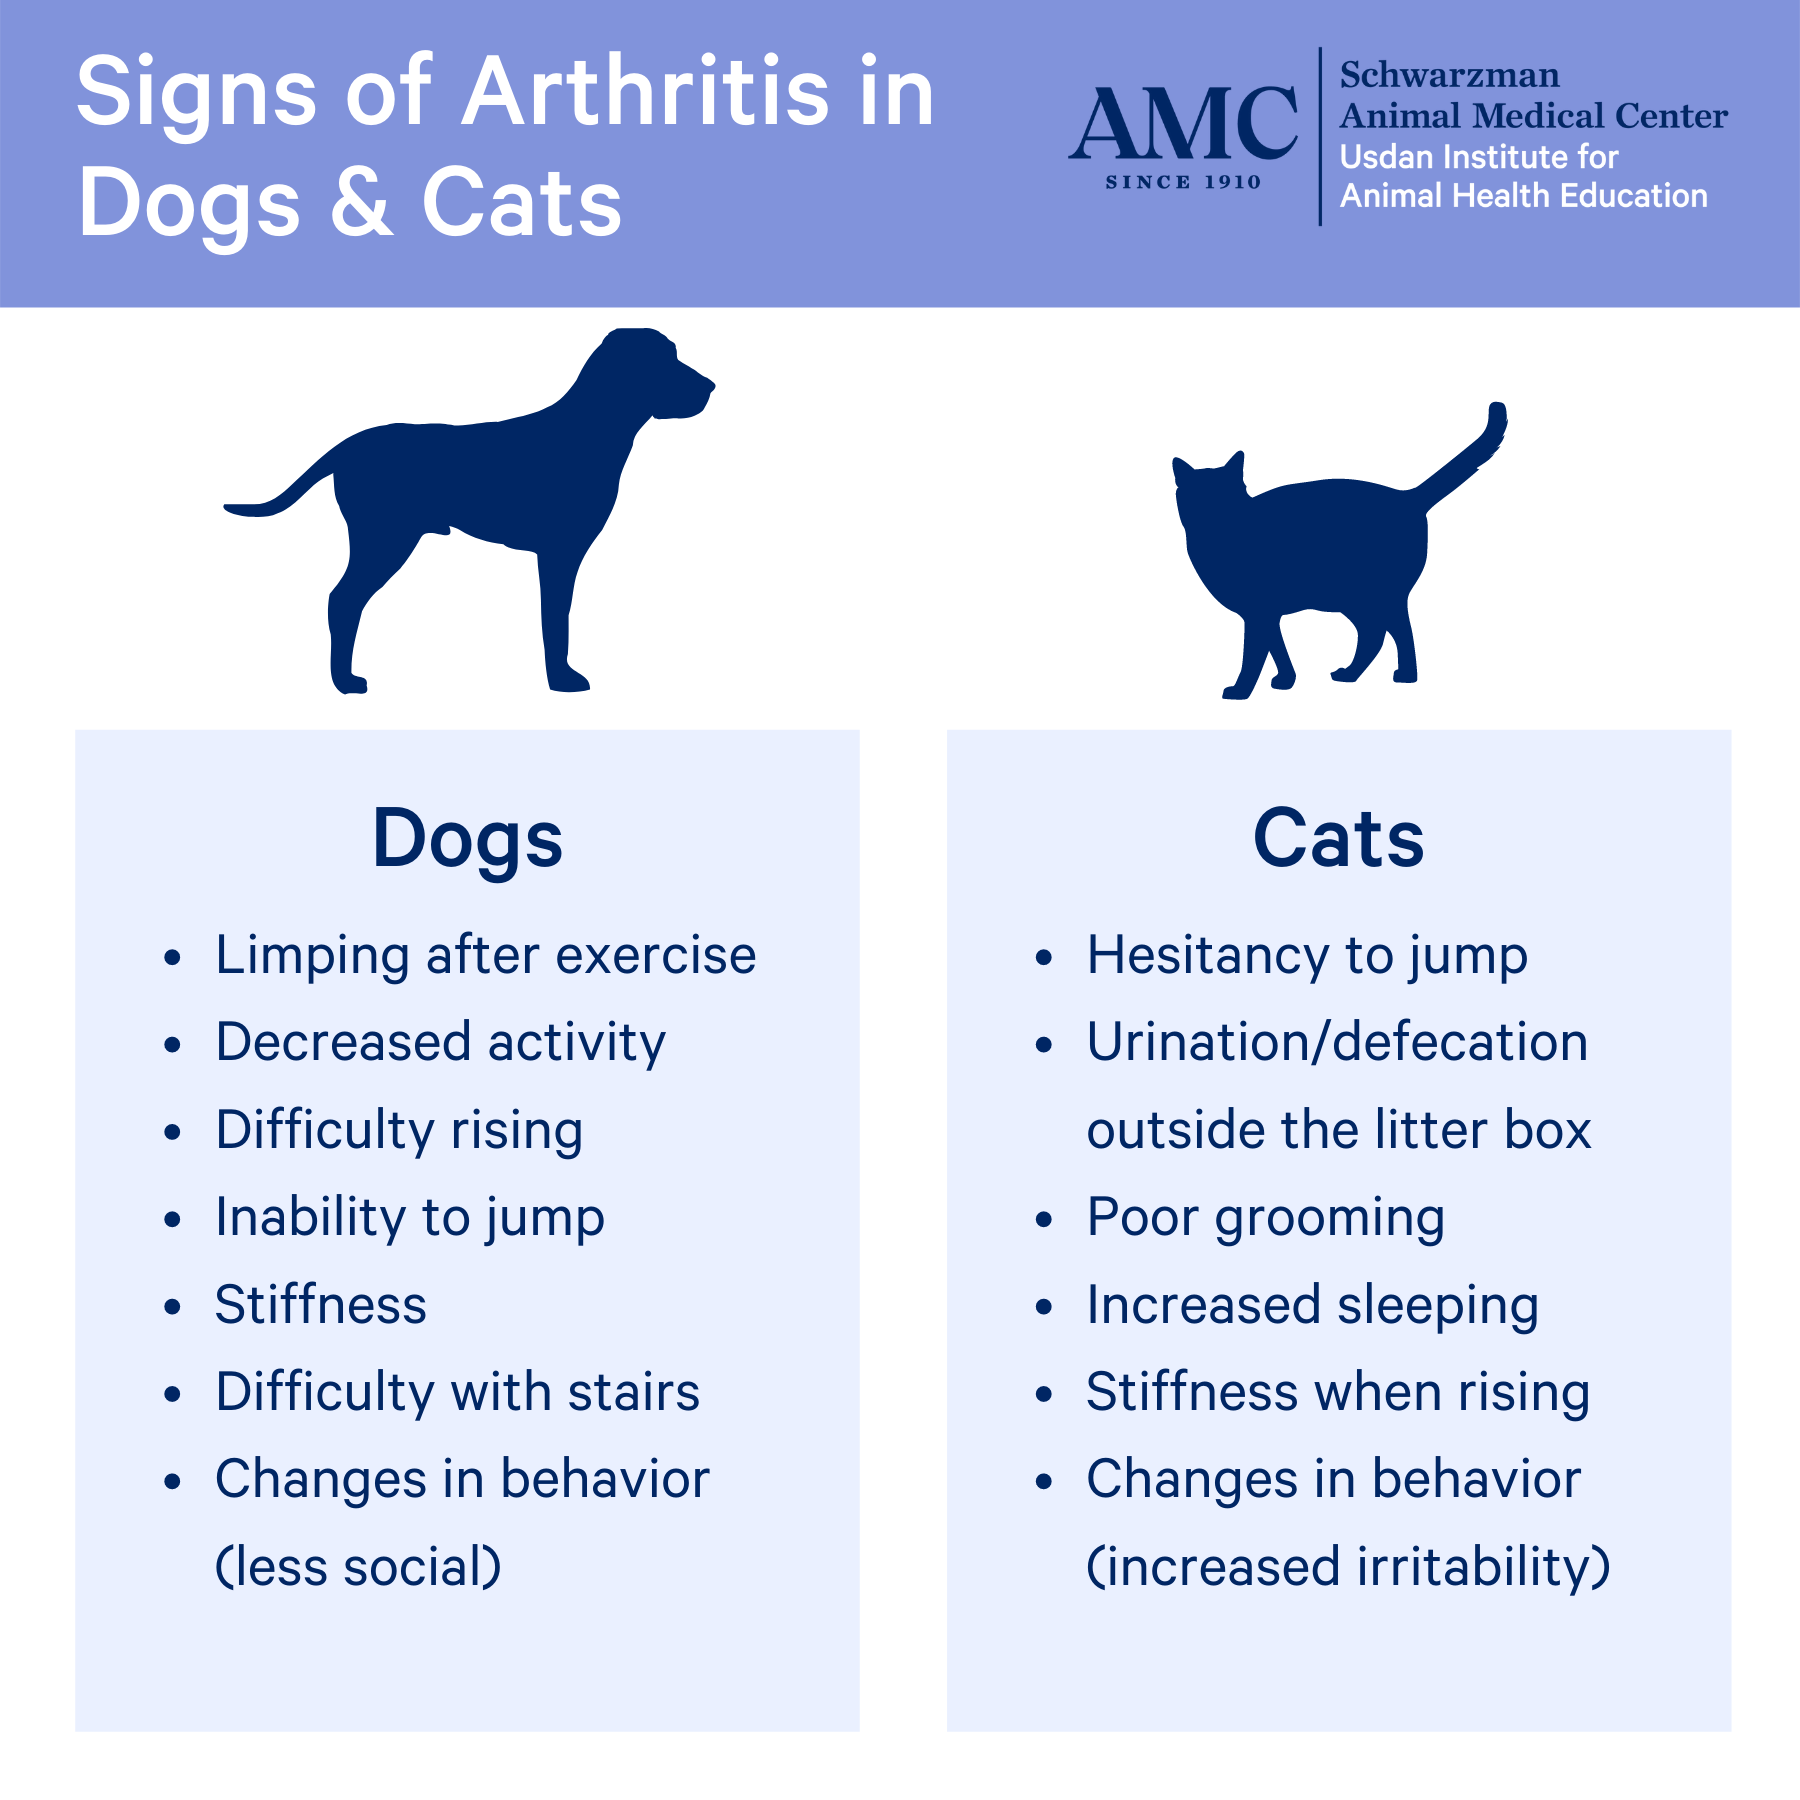 Signs of arthritis